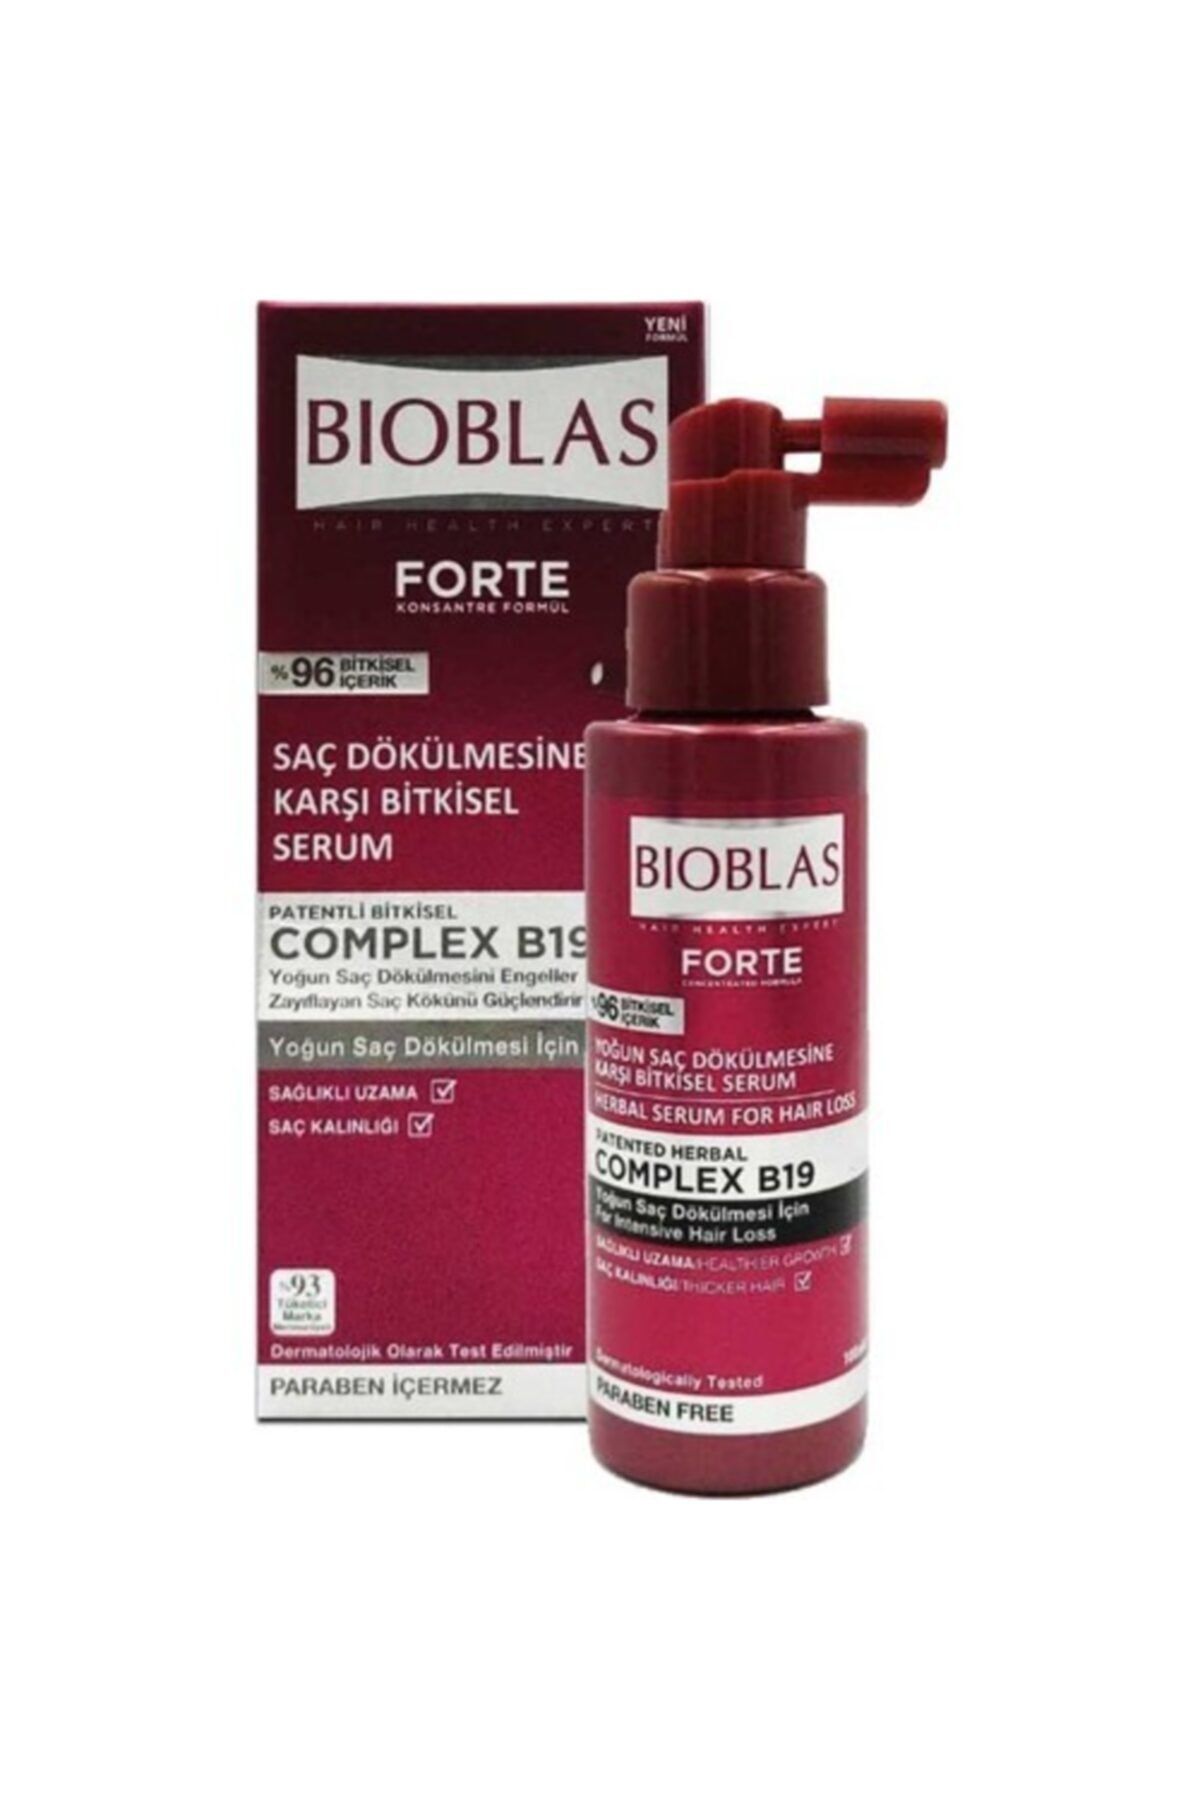 Bioblas Forte Saç Dökülmesine Karşı Bitkisel Serum 100 Ml Fiyatı